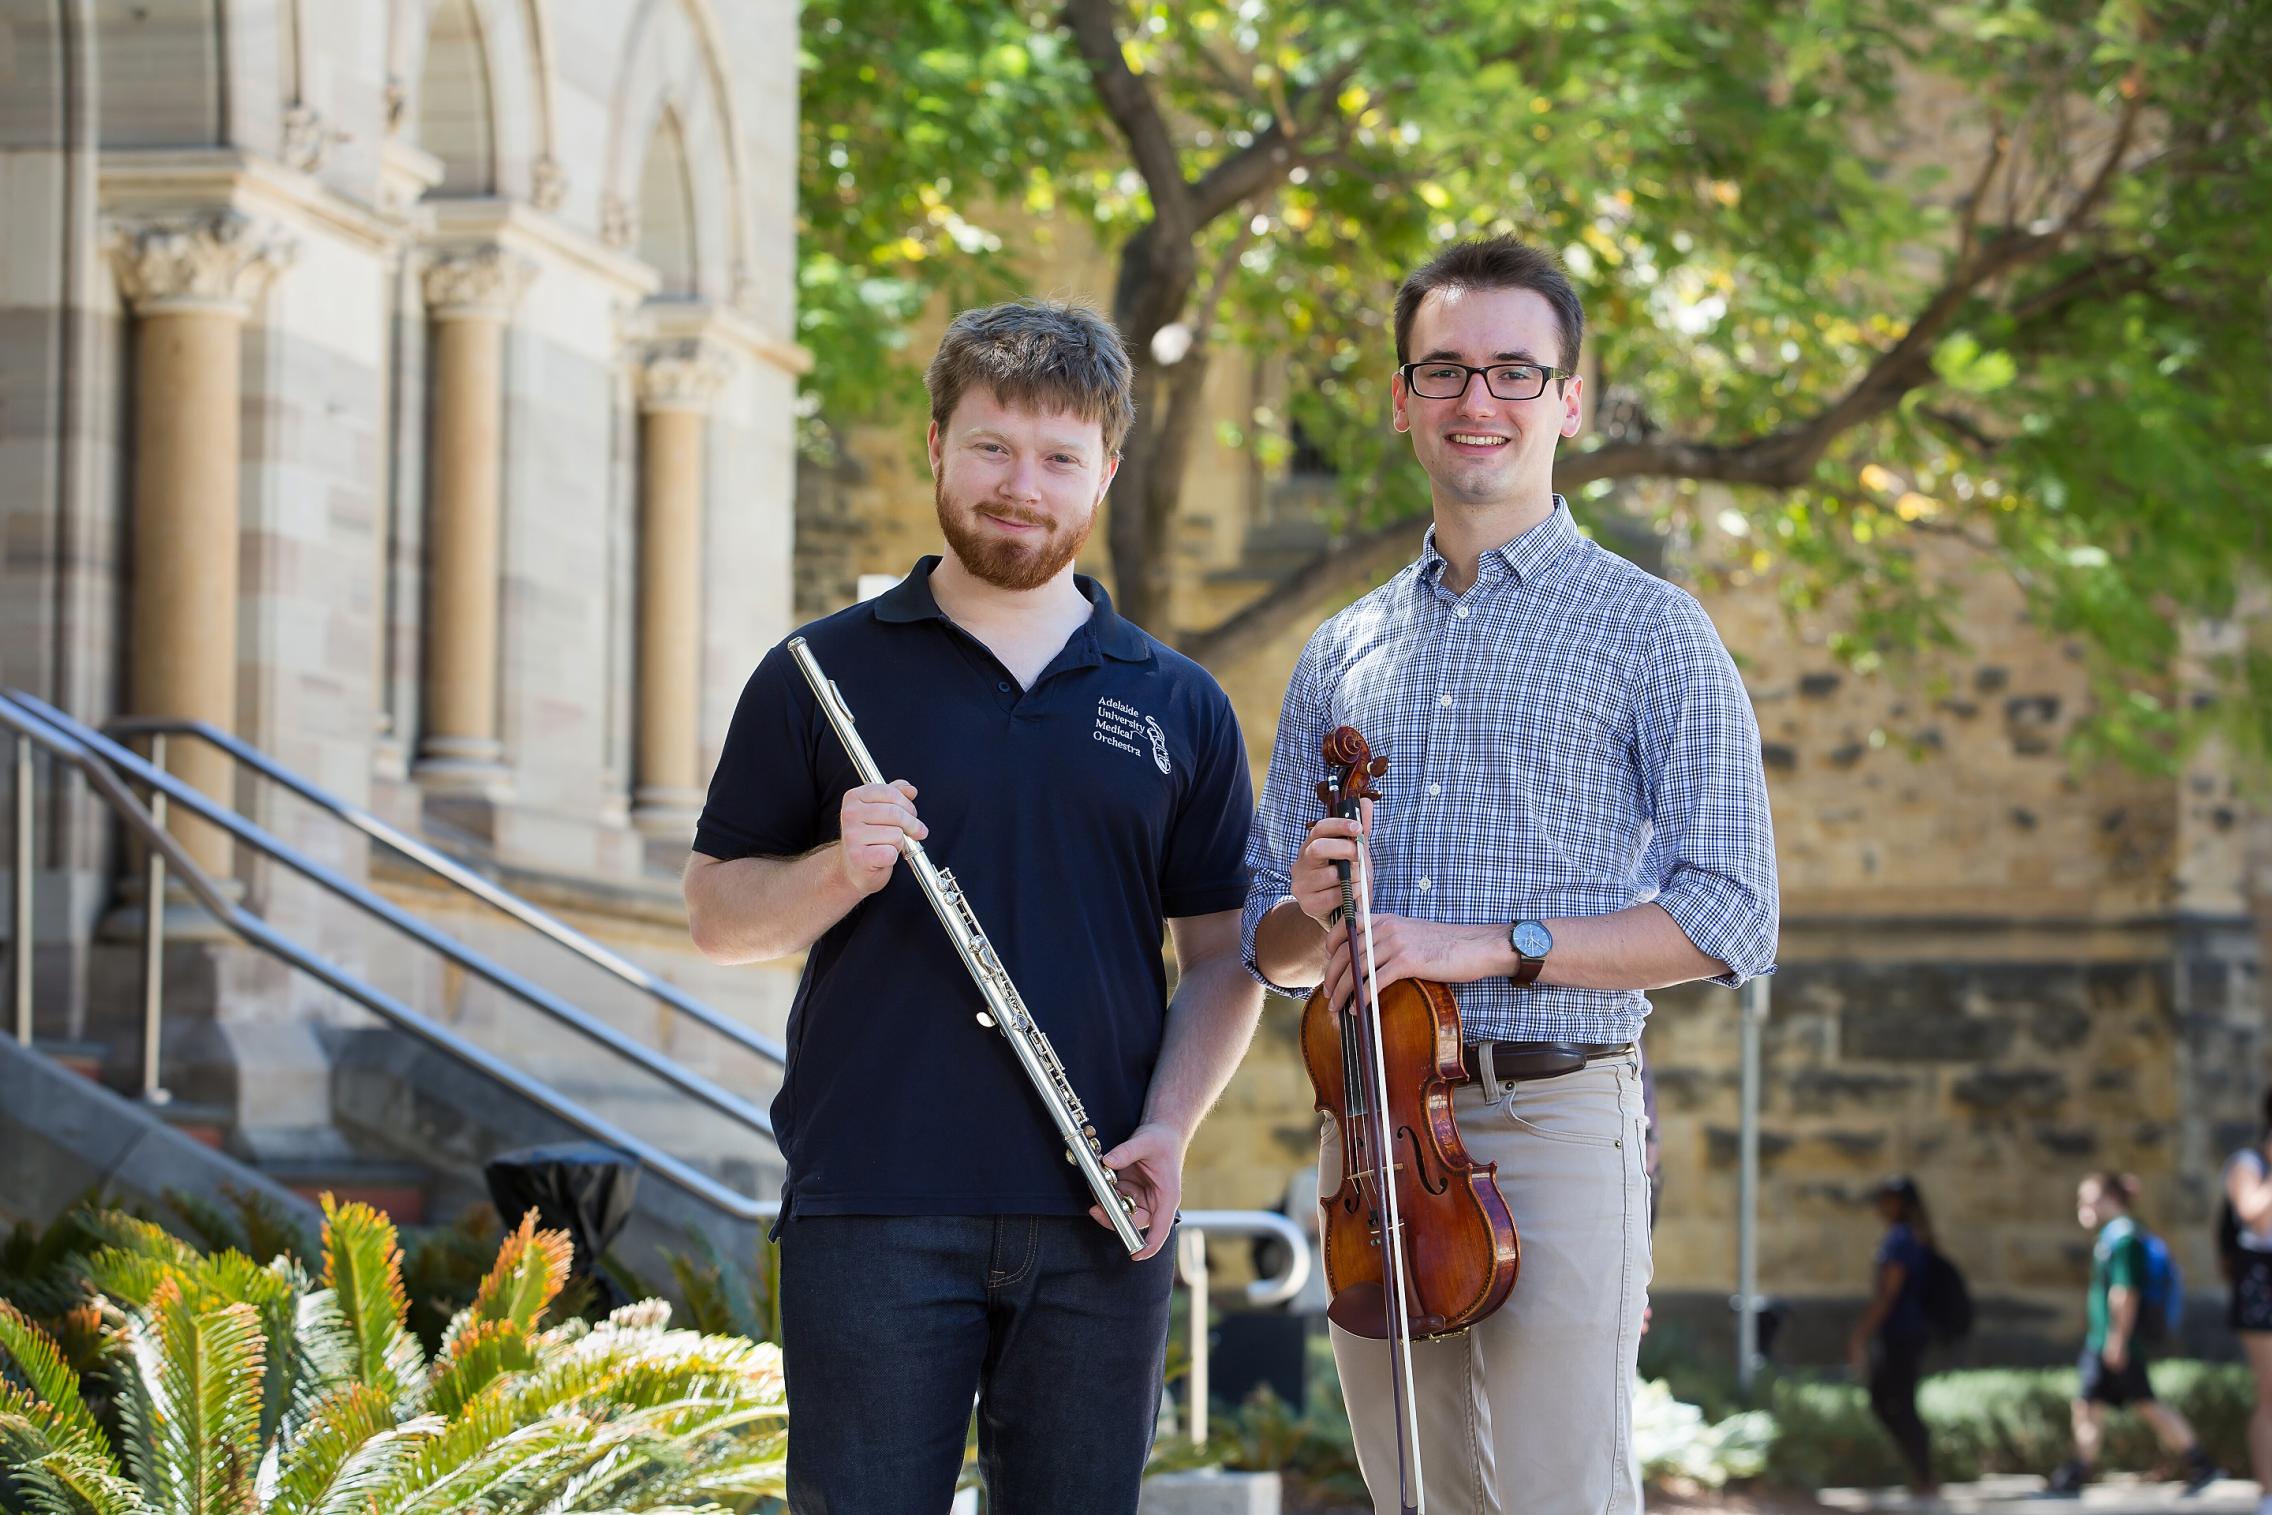 Adelaide University Medical Orchestra's Thomas Johns and Michael Riceman